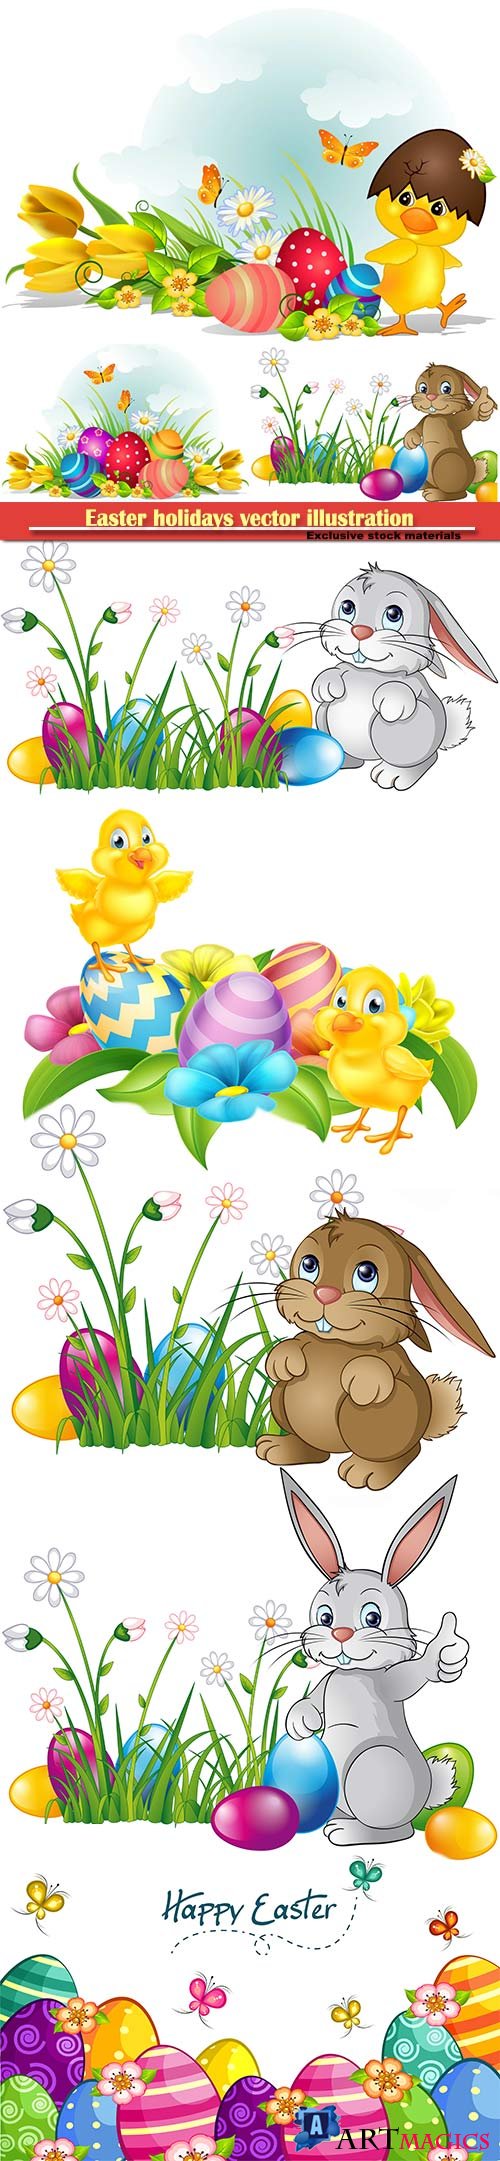 Easter holidays vector illustration # 5